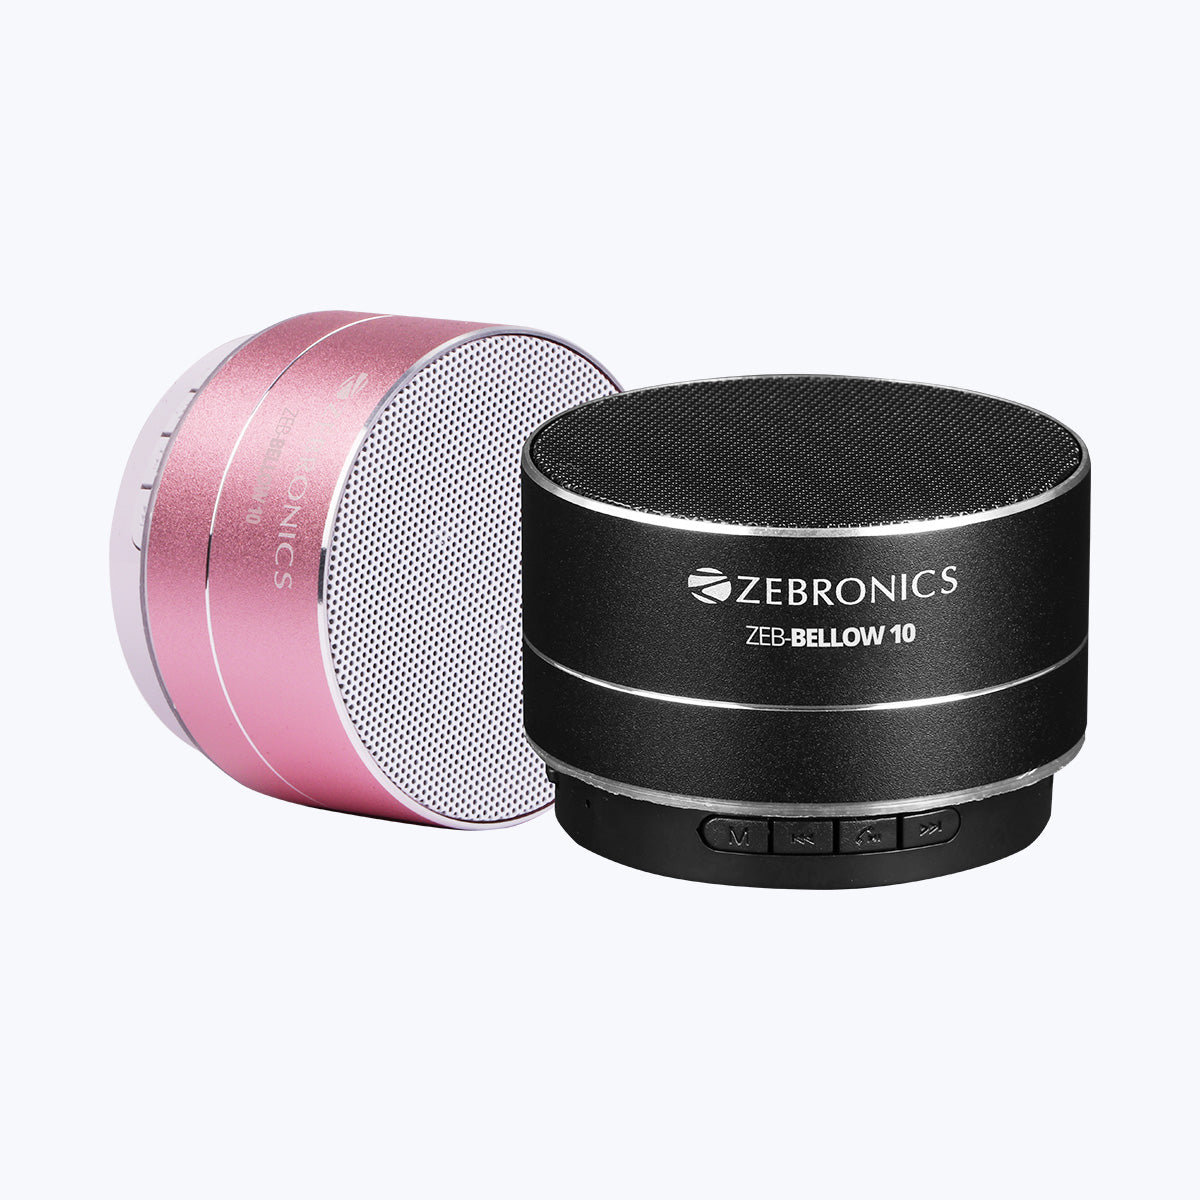 Zeb-Bellow 10 - Wireless Portable Speaker - Zebronics